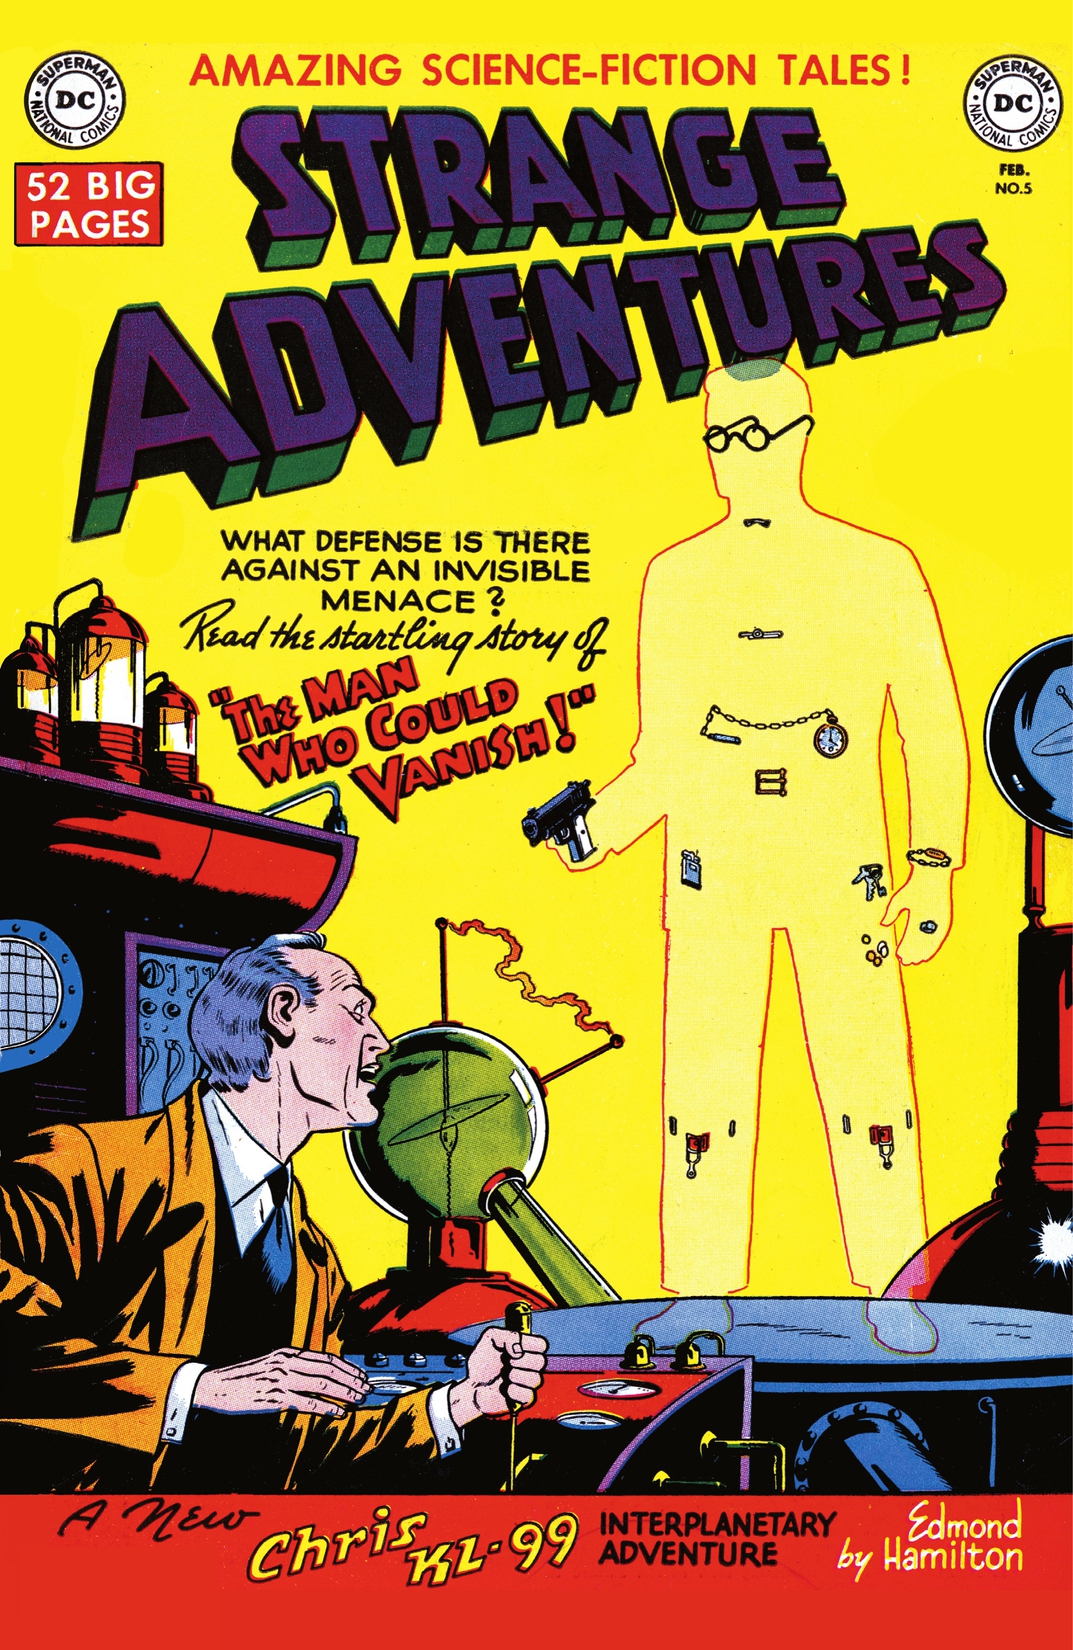 Strange Adventures (1950-1973) #5 preview images